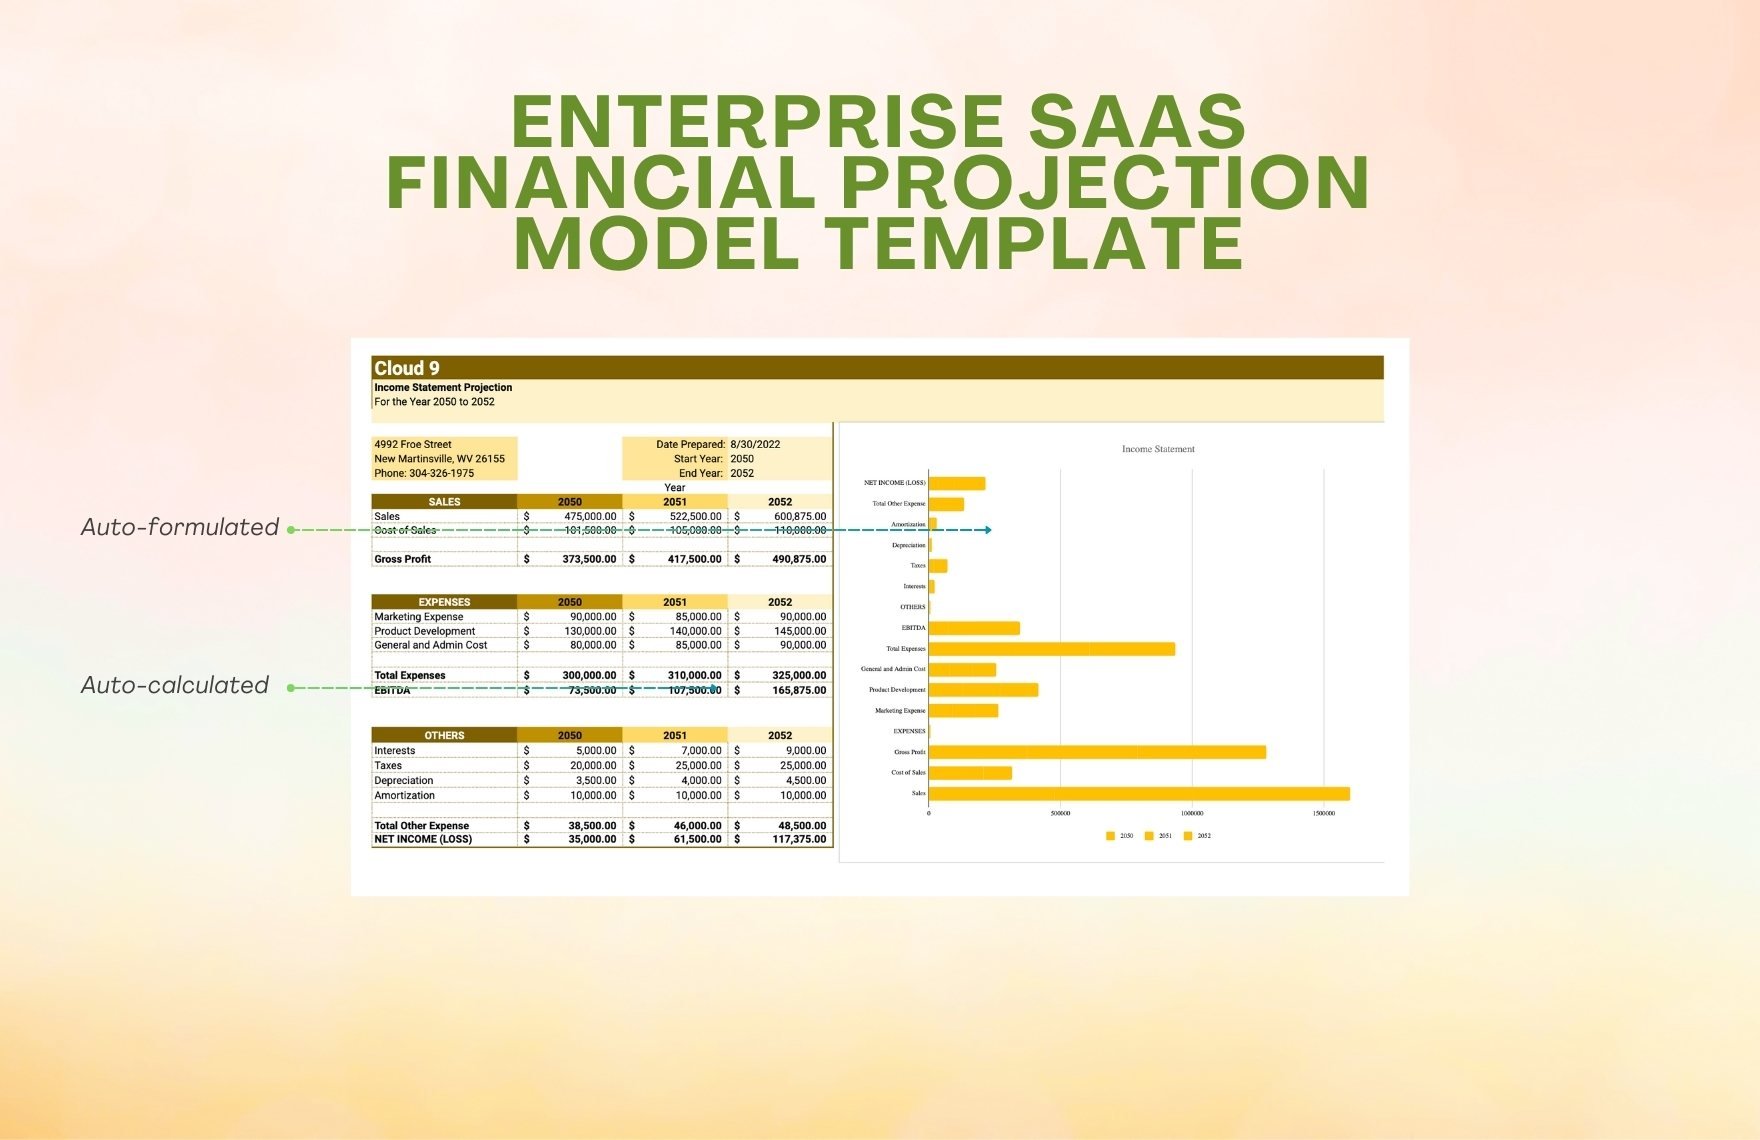 Enterprise SaaS Financial Projection Model Template